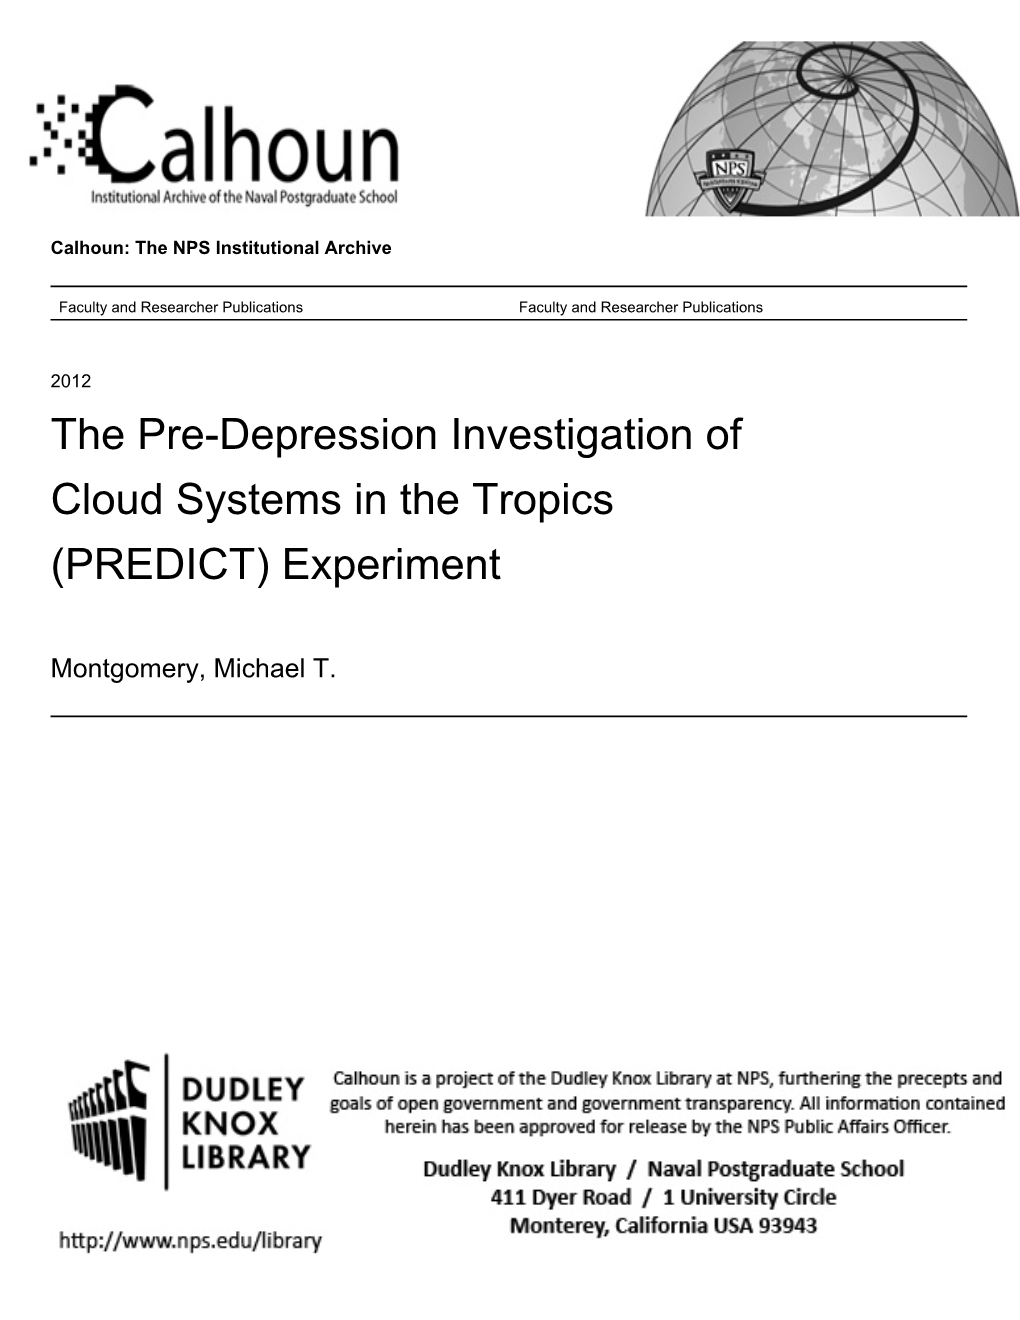 The Pre-Depression Investigation of Cloud Systems in the Tropics (PREDICT) Experiment